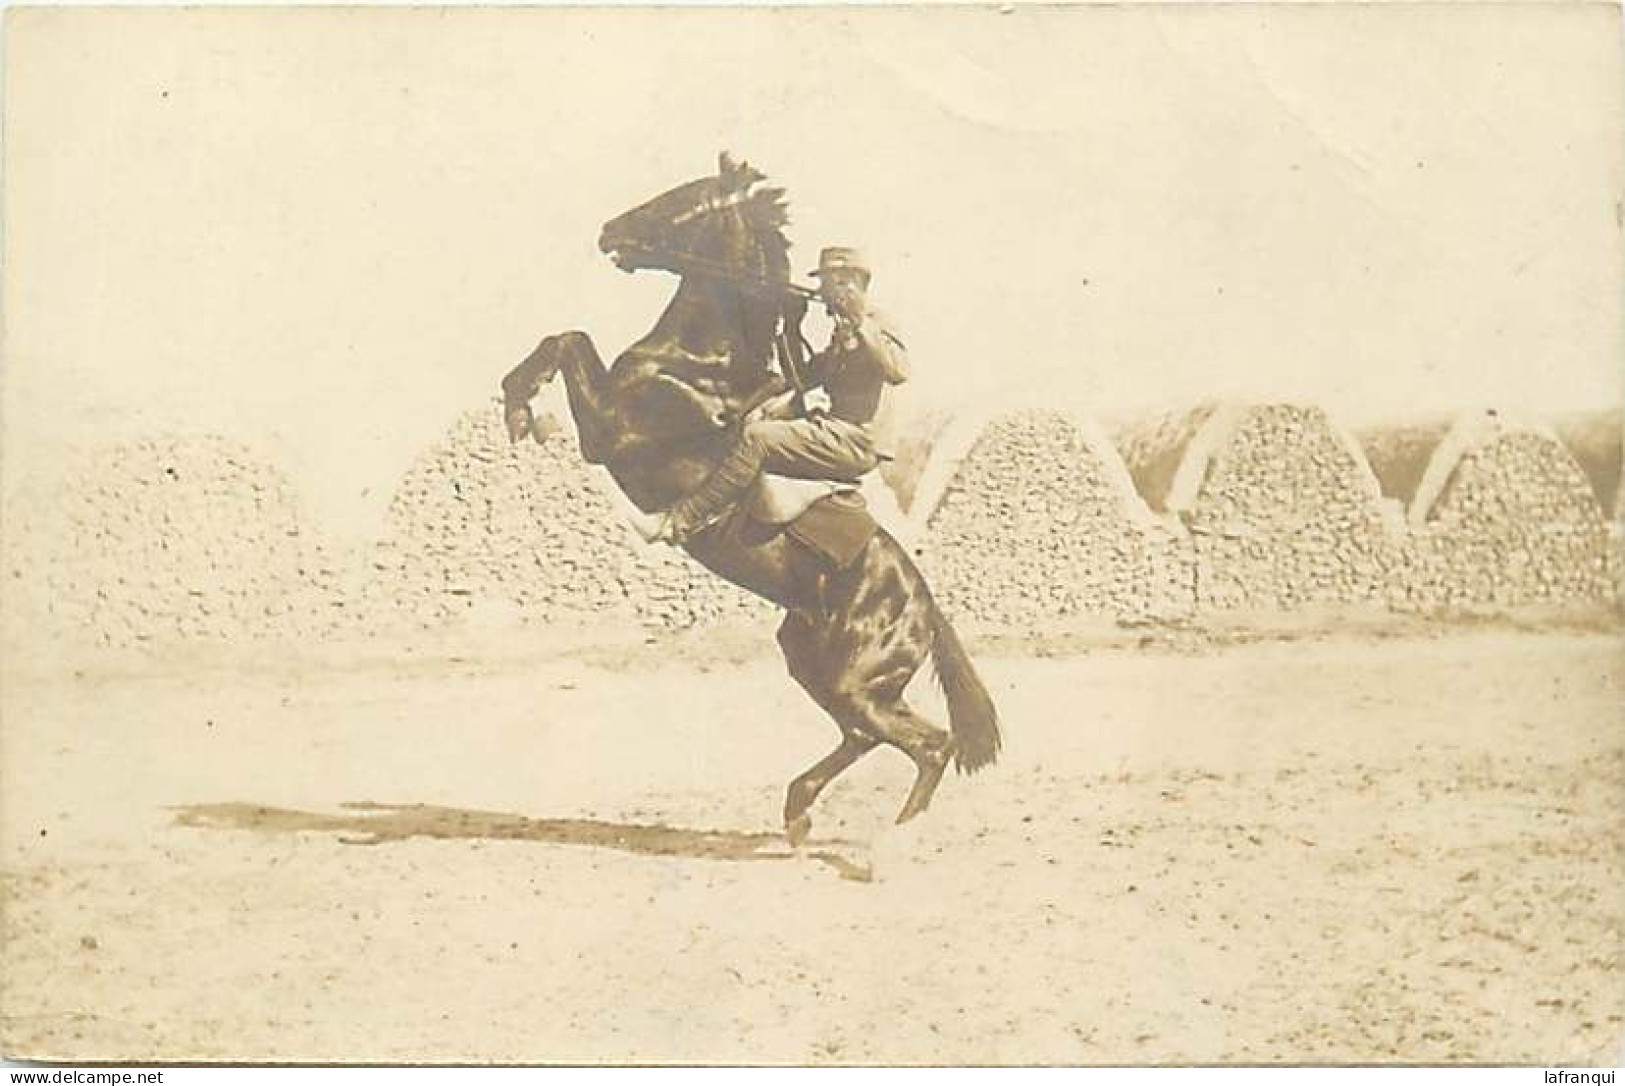 Militaires-ref E93-carte Photo -militaires -militaria -regiments -regiment - Cheval Gosse Et Son Cavalier - - Horses